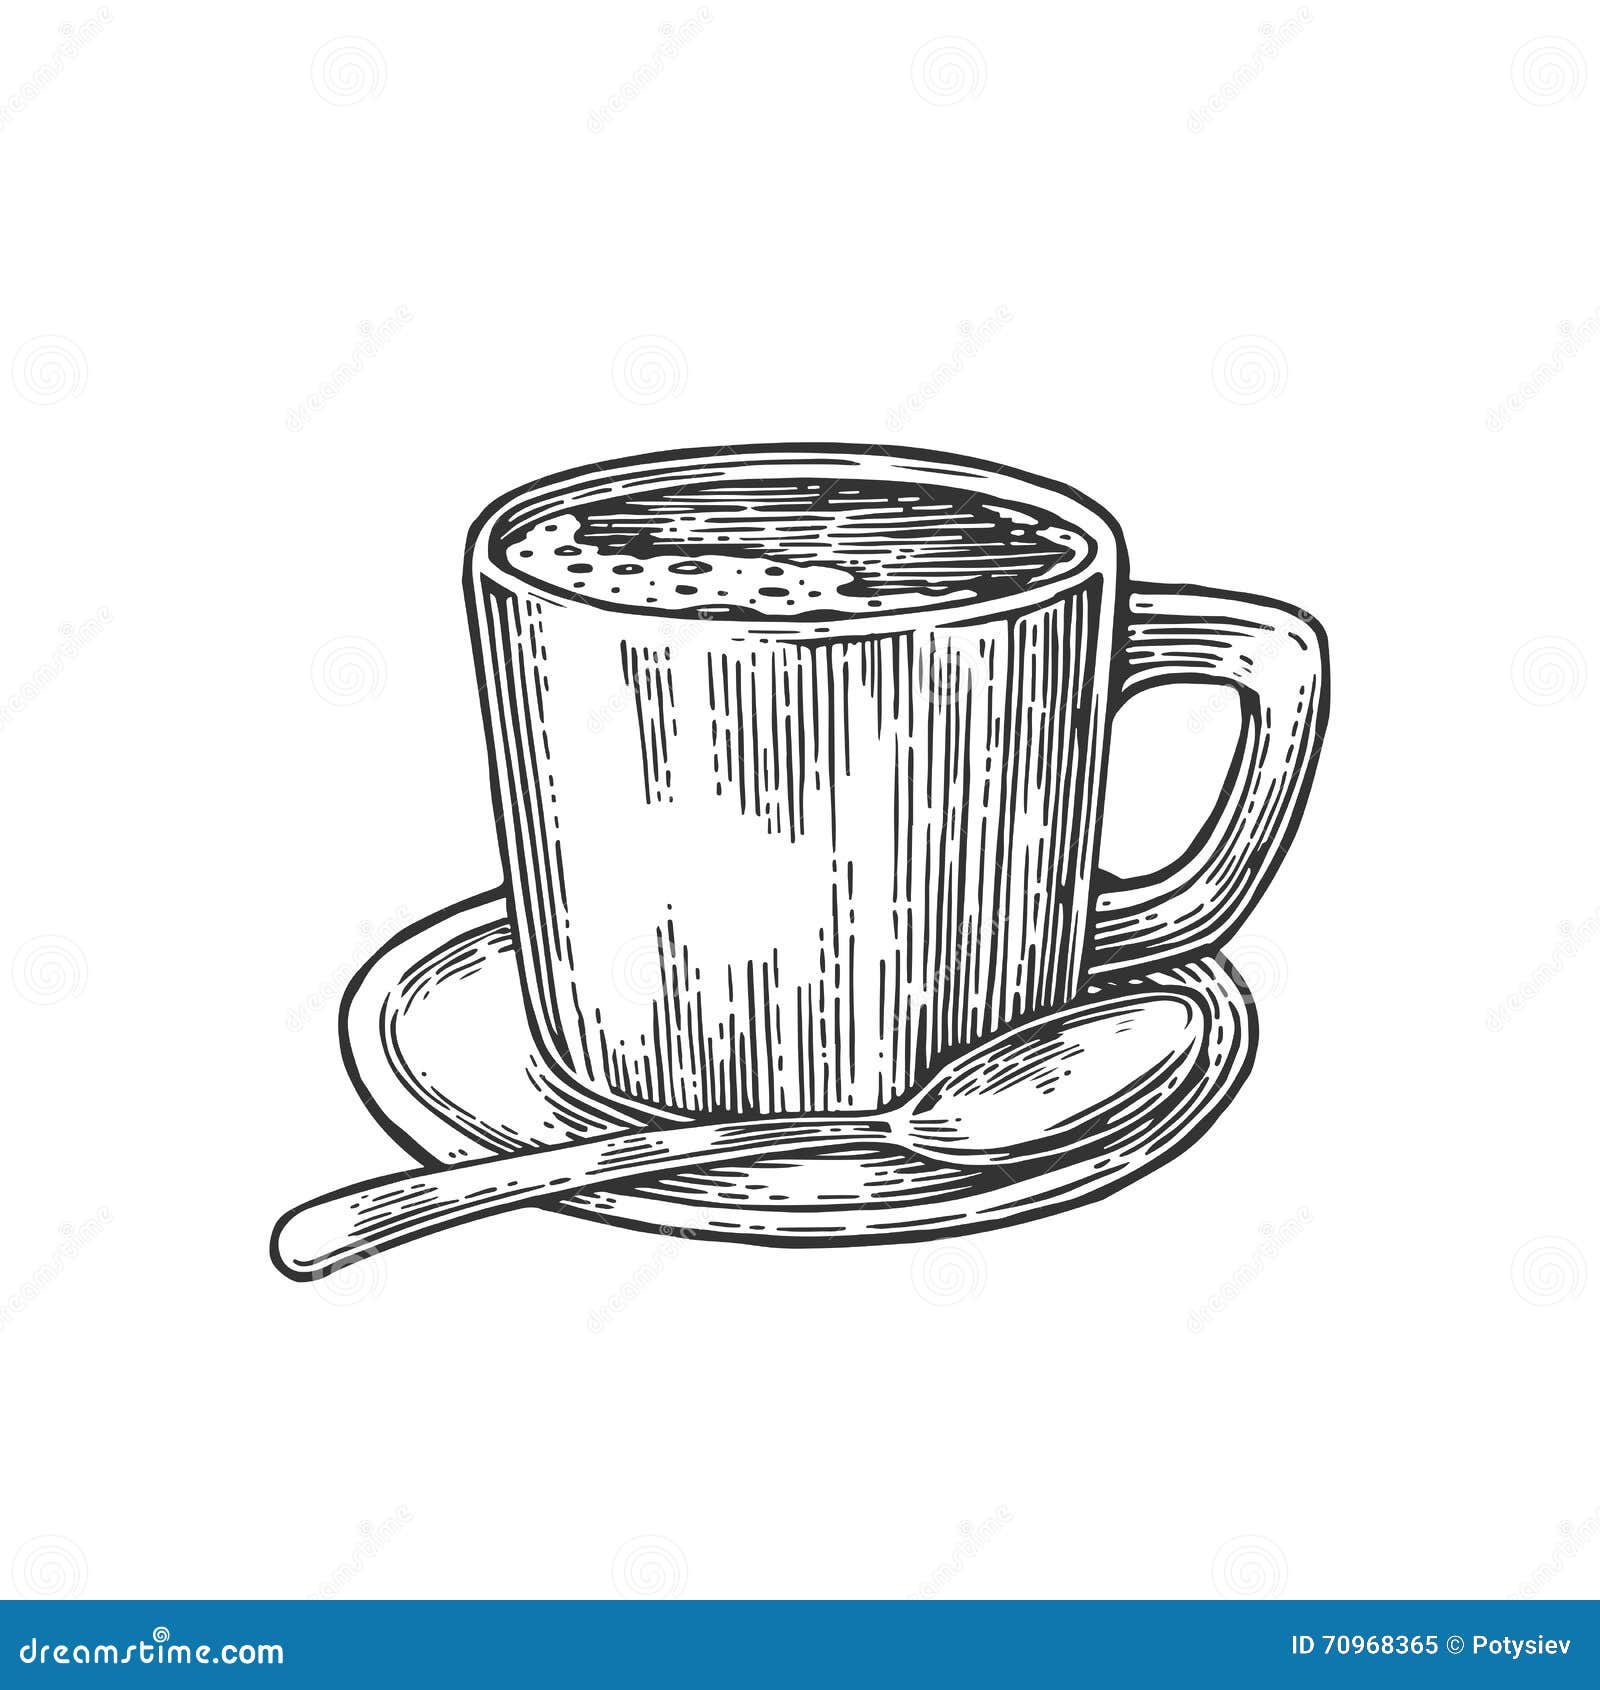 Coffee Sketch Images  Free Download on Freepik